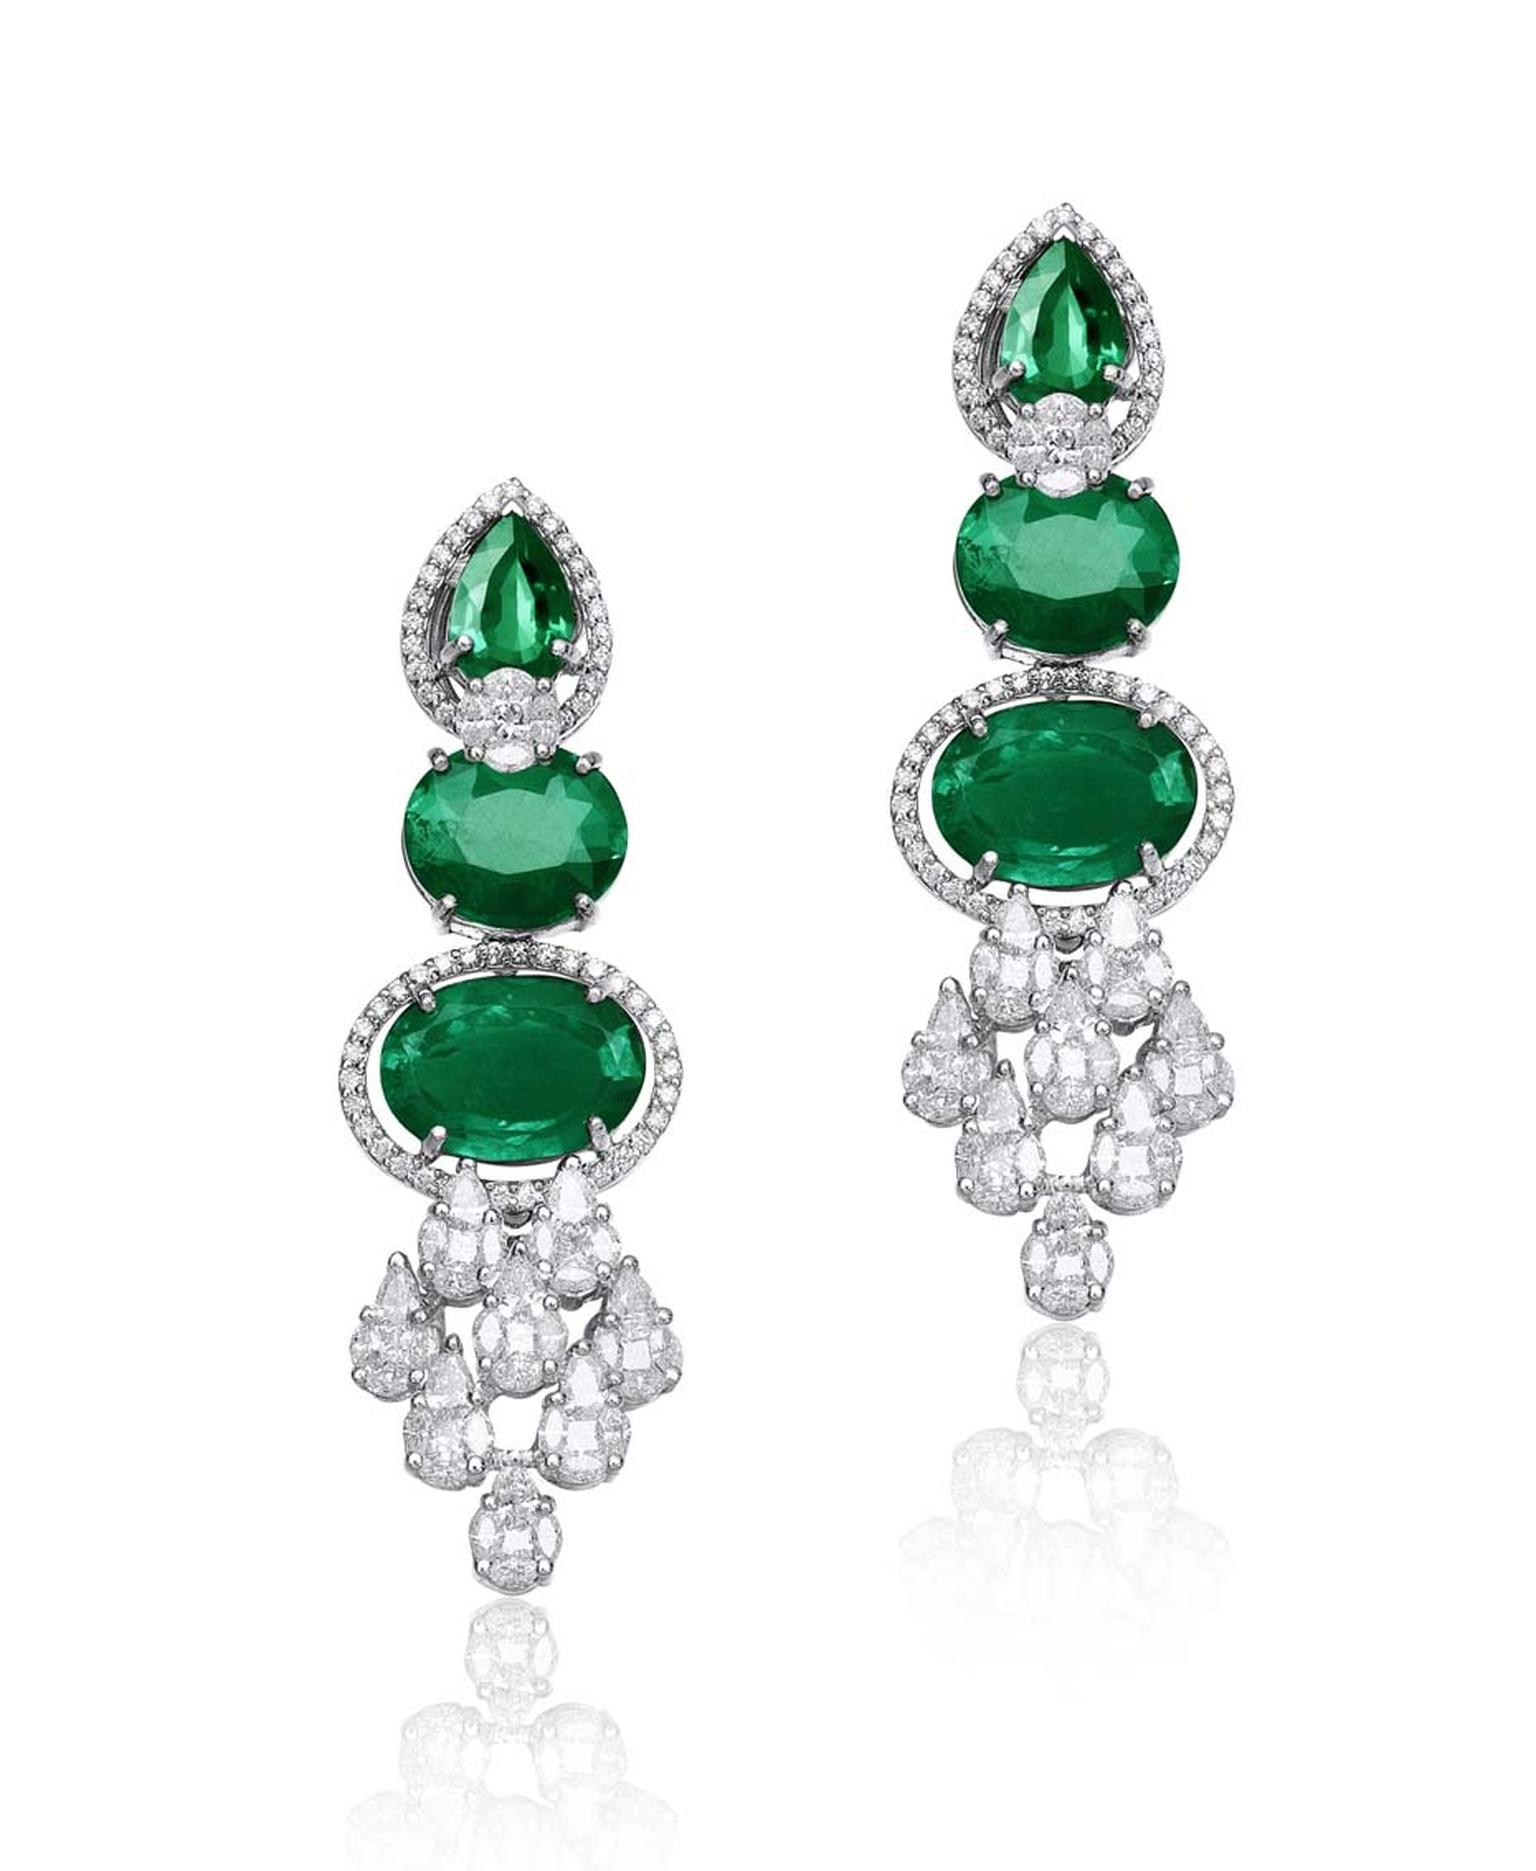 Varuna D Jani earrings featuring diamonds and emeralds